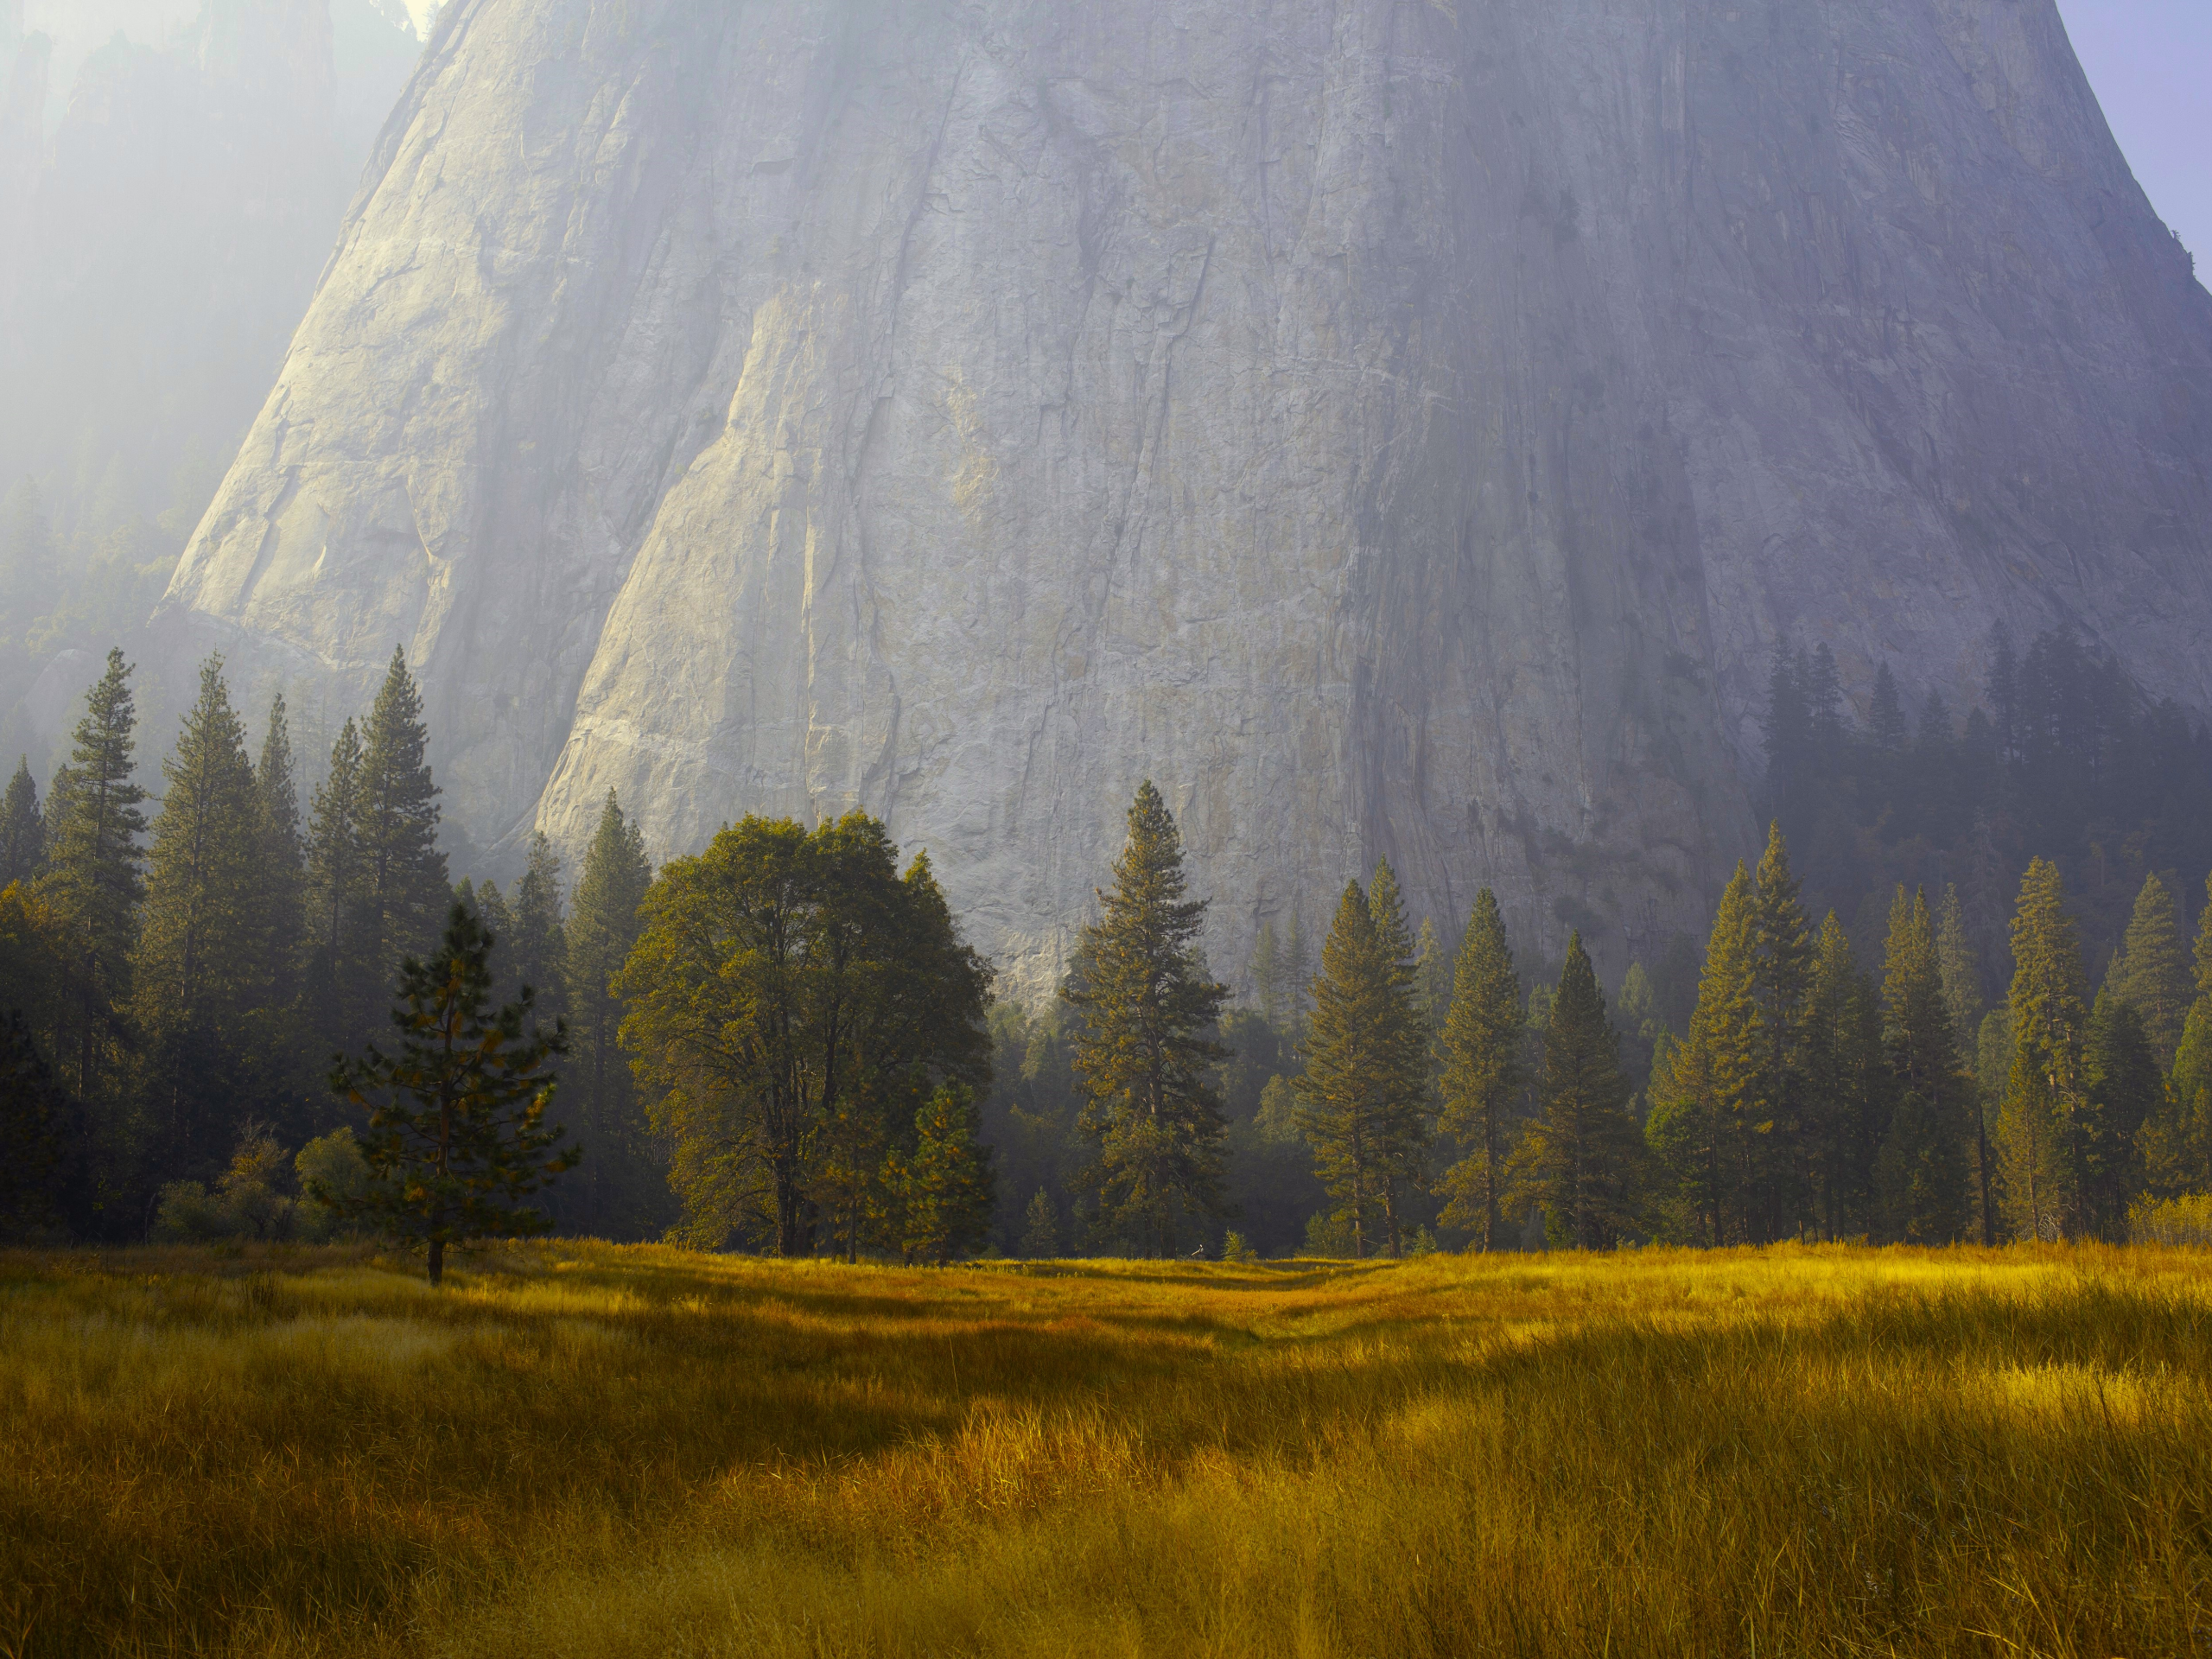 General 2560x1920 nature landscape trees grass mountains fog Yosemite National Park California USA